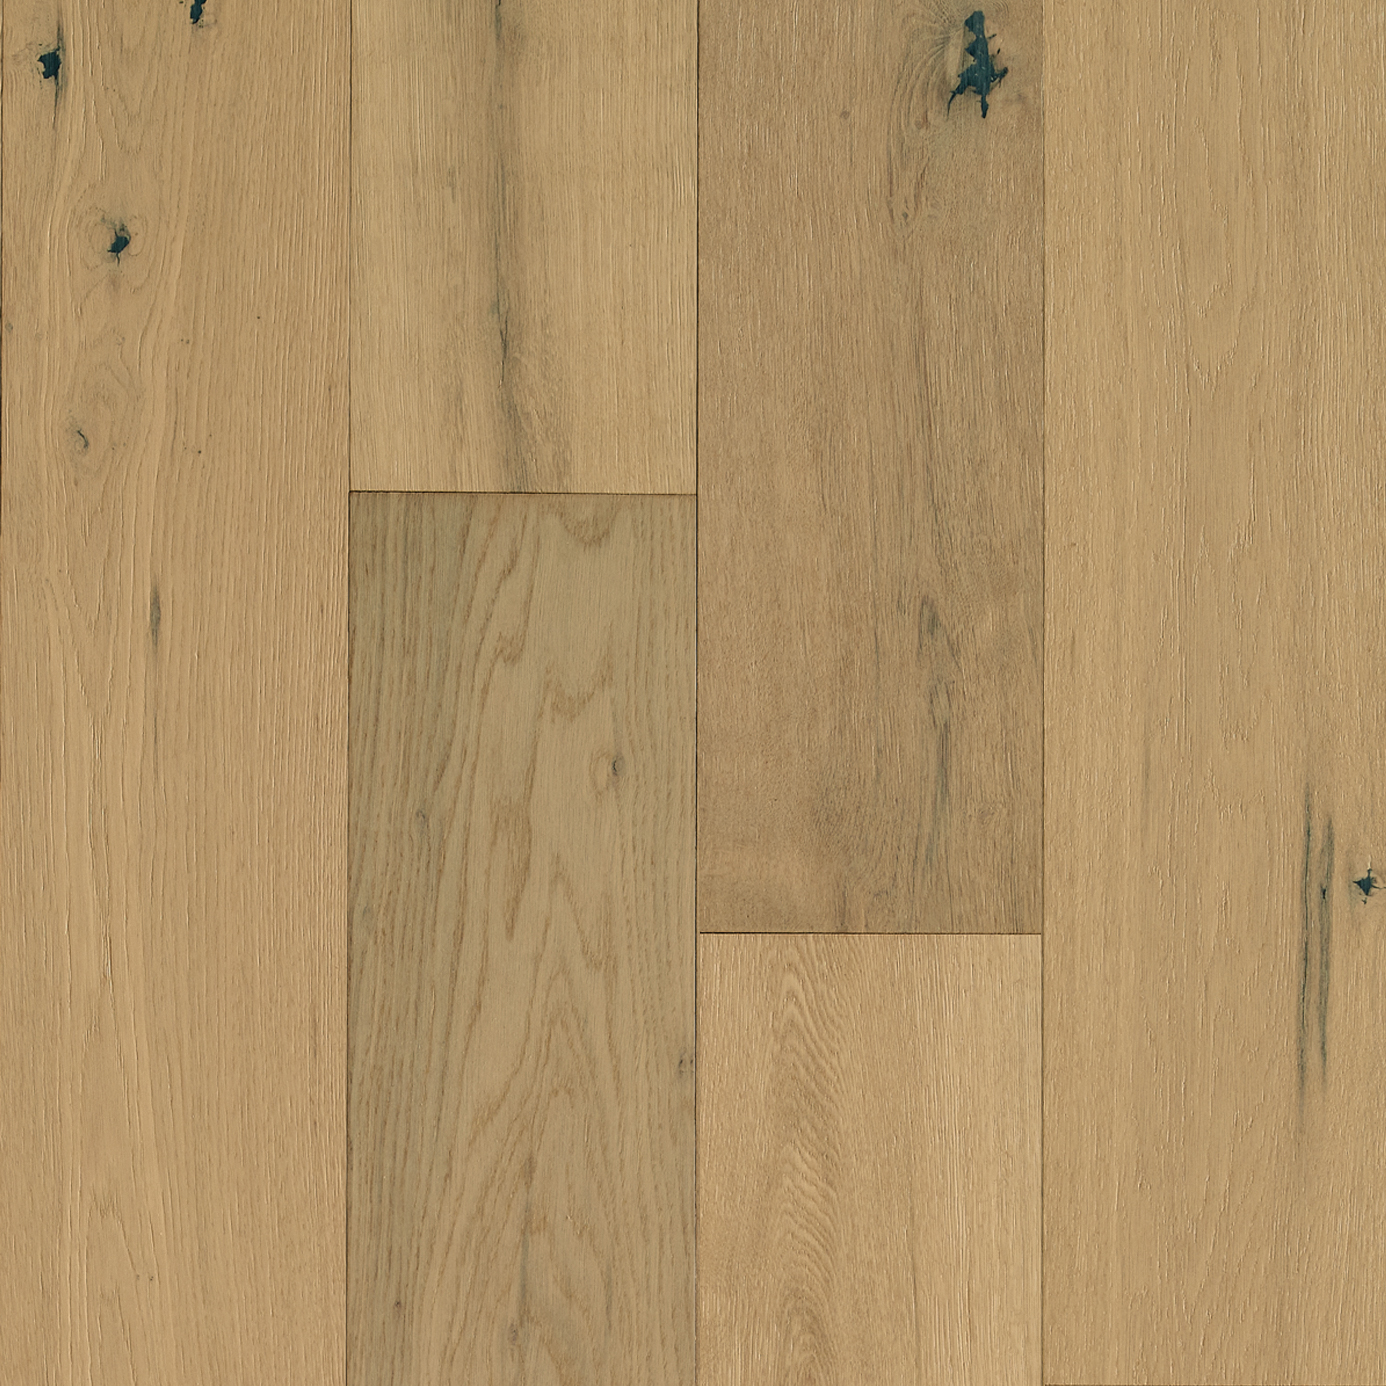 White Oak Engineered Hardwood Brbh63ek12w, Momentum Hardwood Flooring